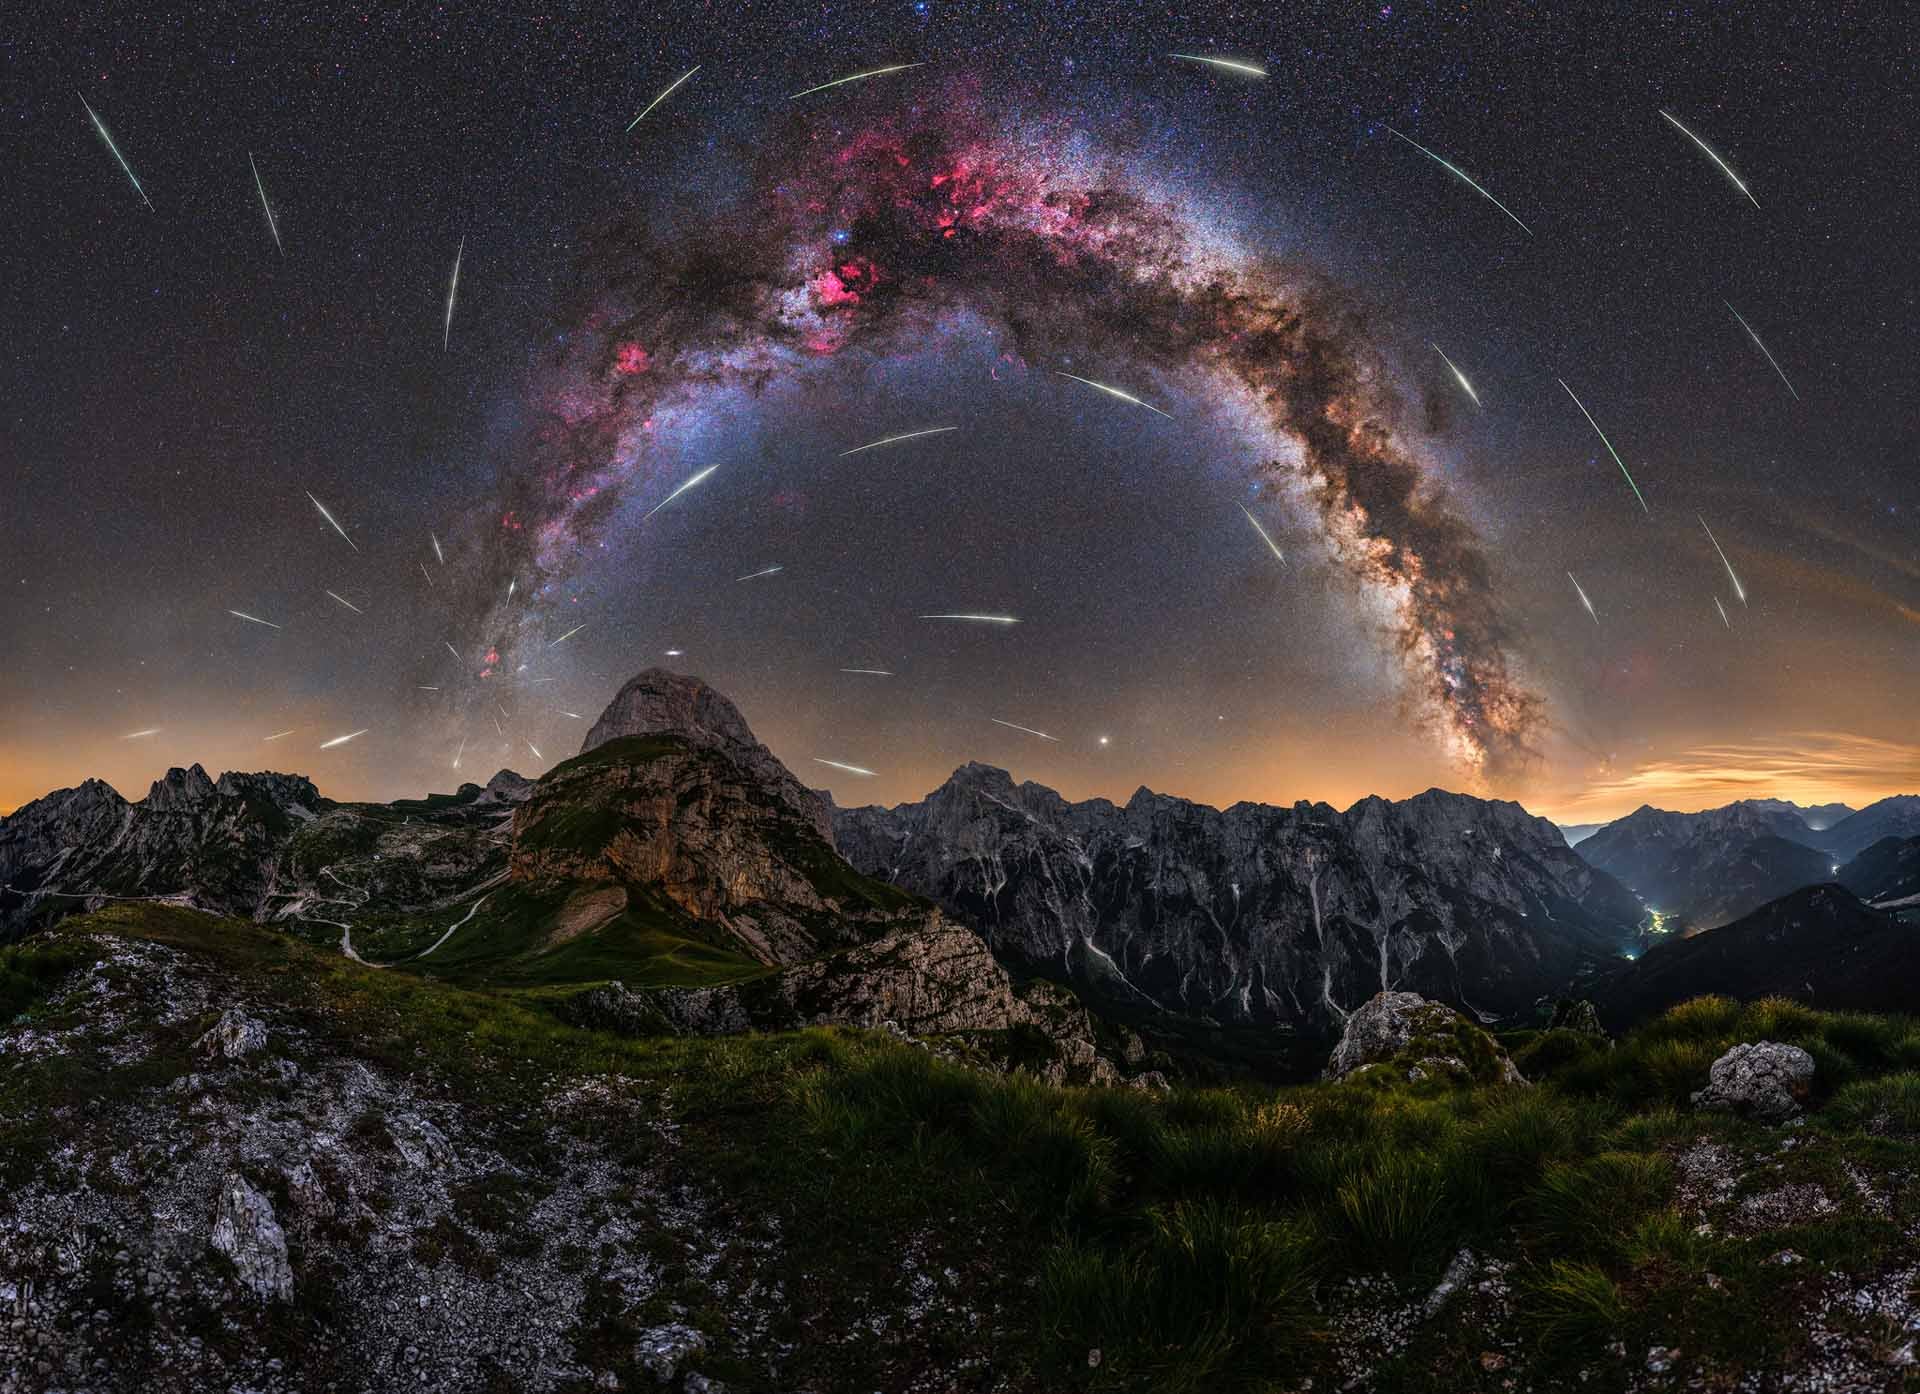 Meteors streak in front of the Milky Way in Slovenia. (Photo: Uroš Fink)